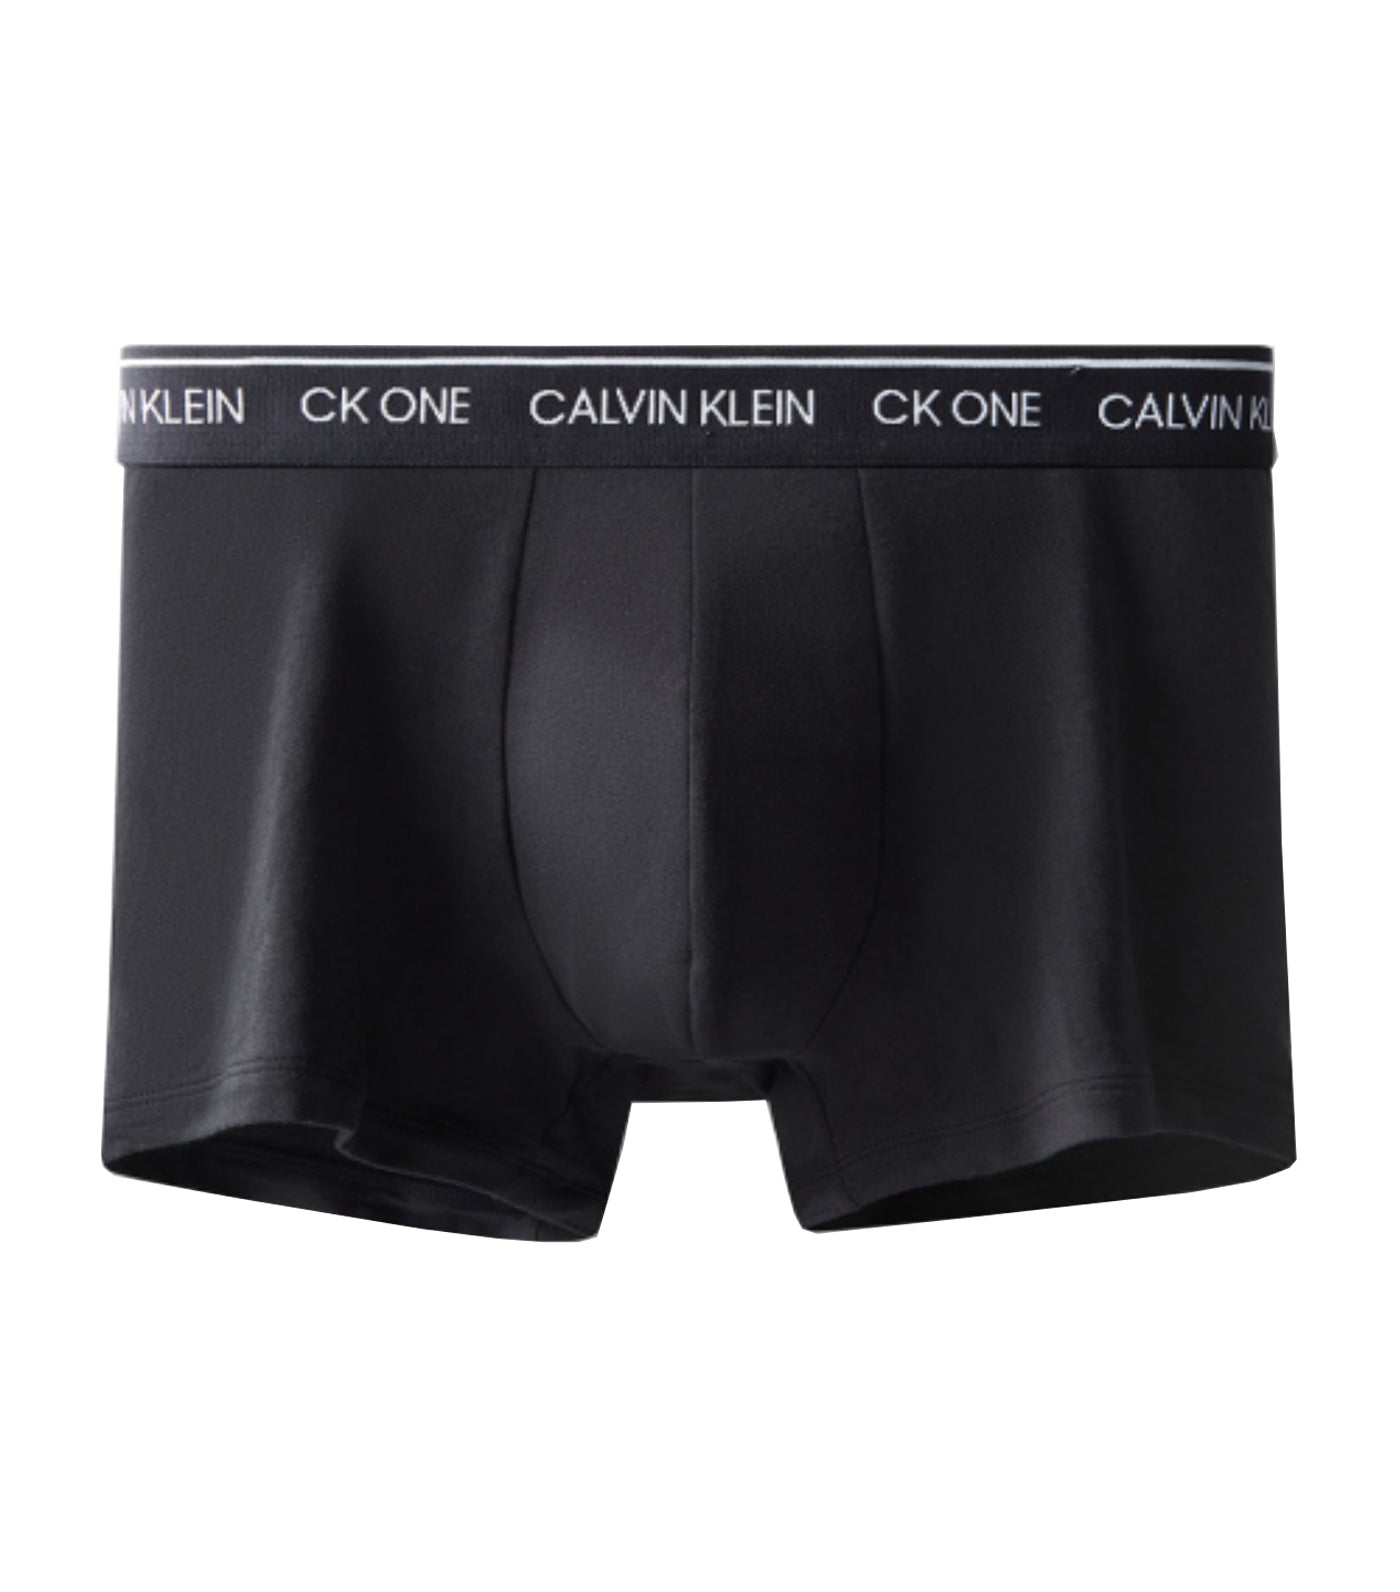 Boxer shorts Calvin Klein Cotton Stretch Classic Fit Low Rise Trunk 3-Pack  Black/ Off White/ Black/ Purple